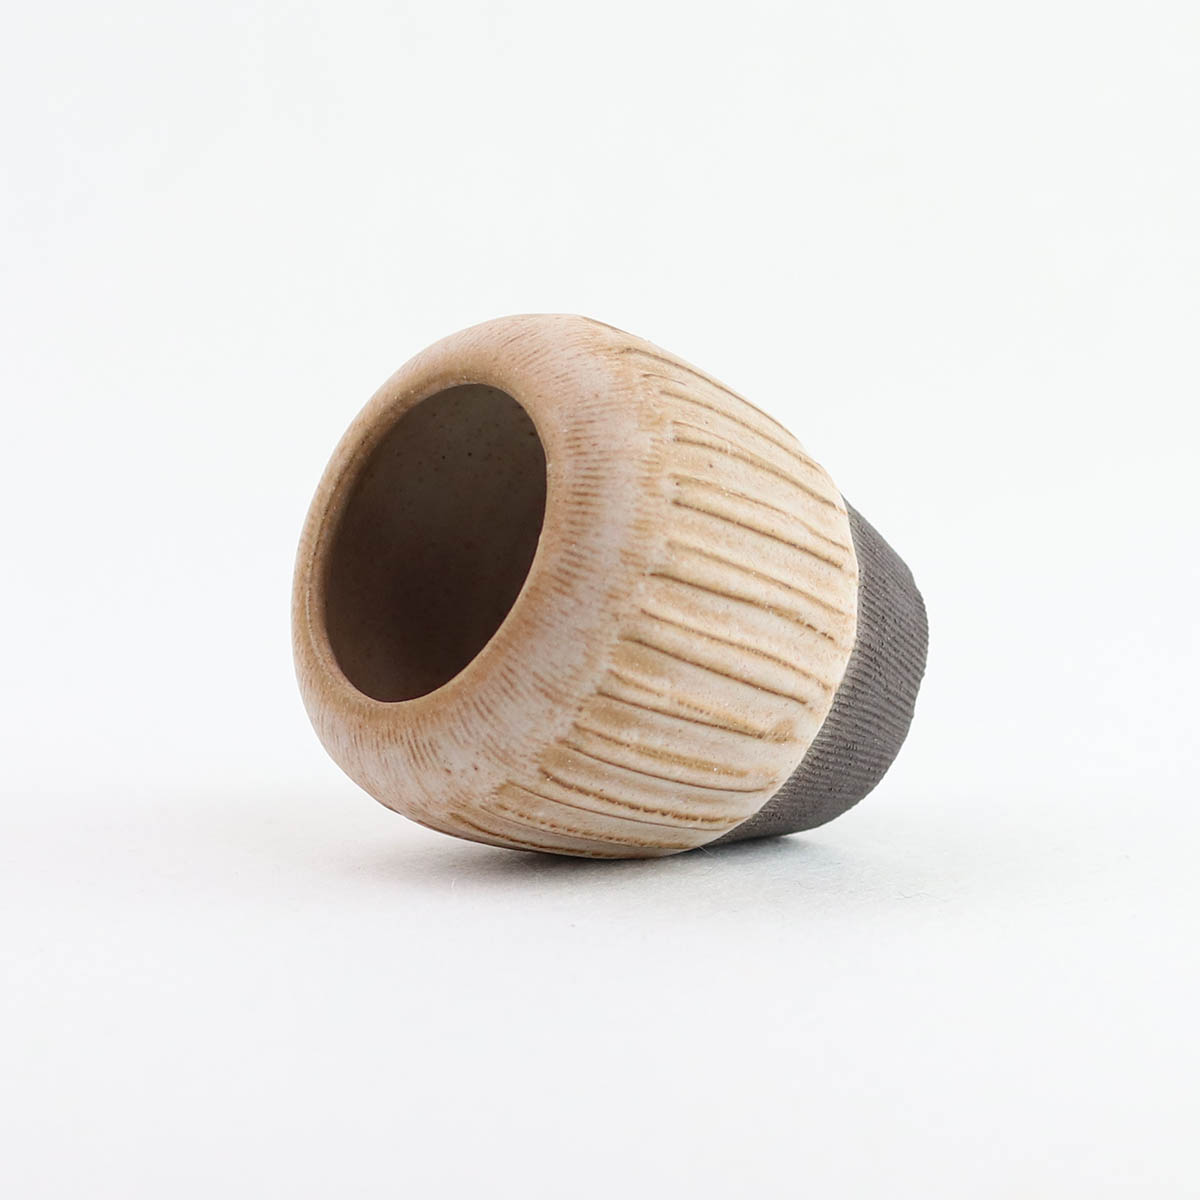 Ceramic vase rømø 24 - handmade